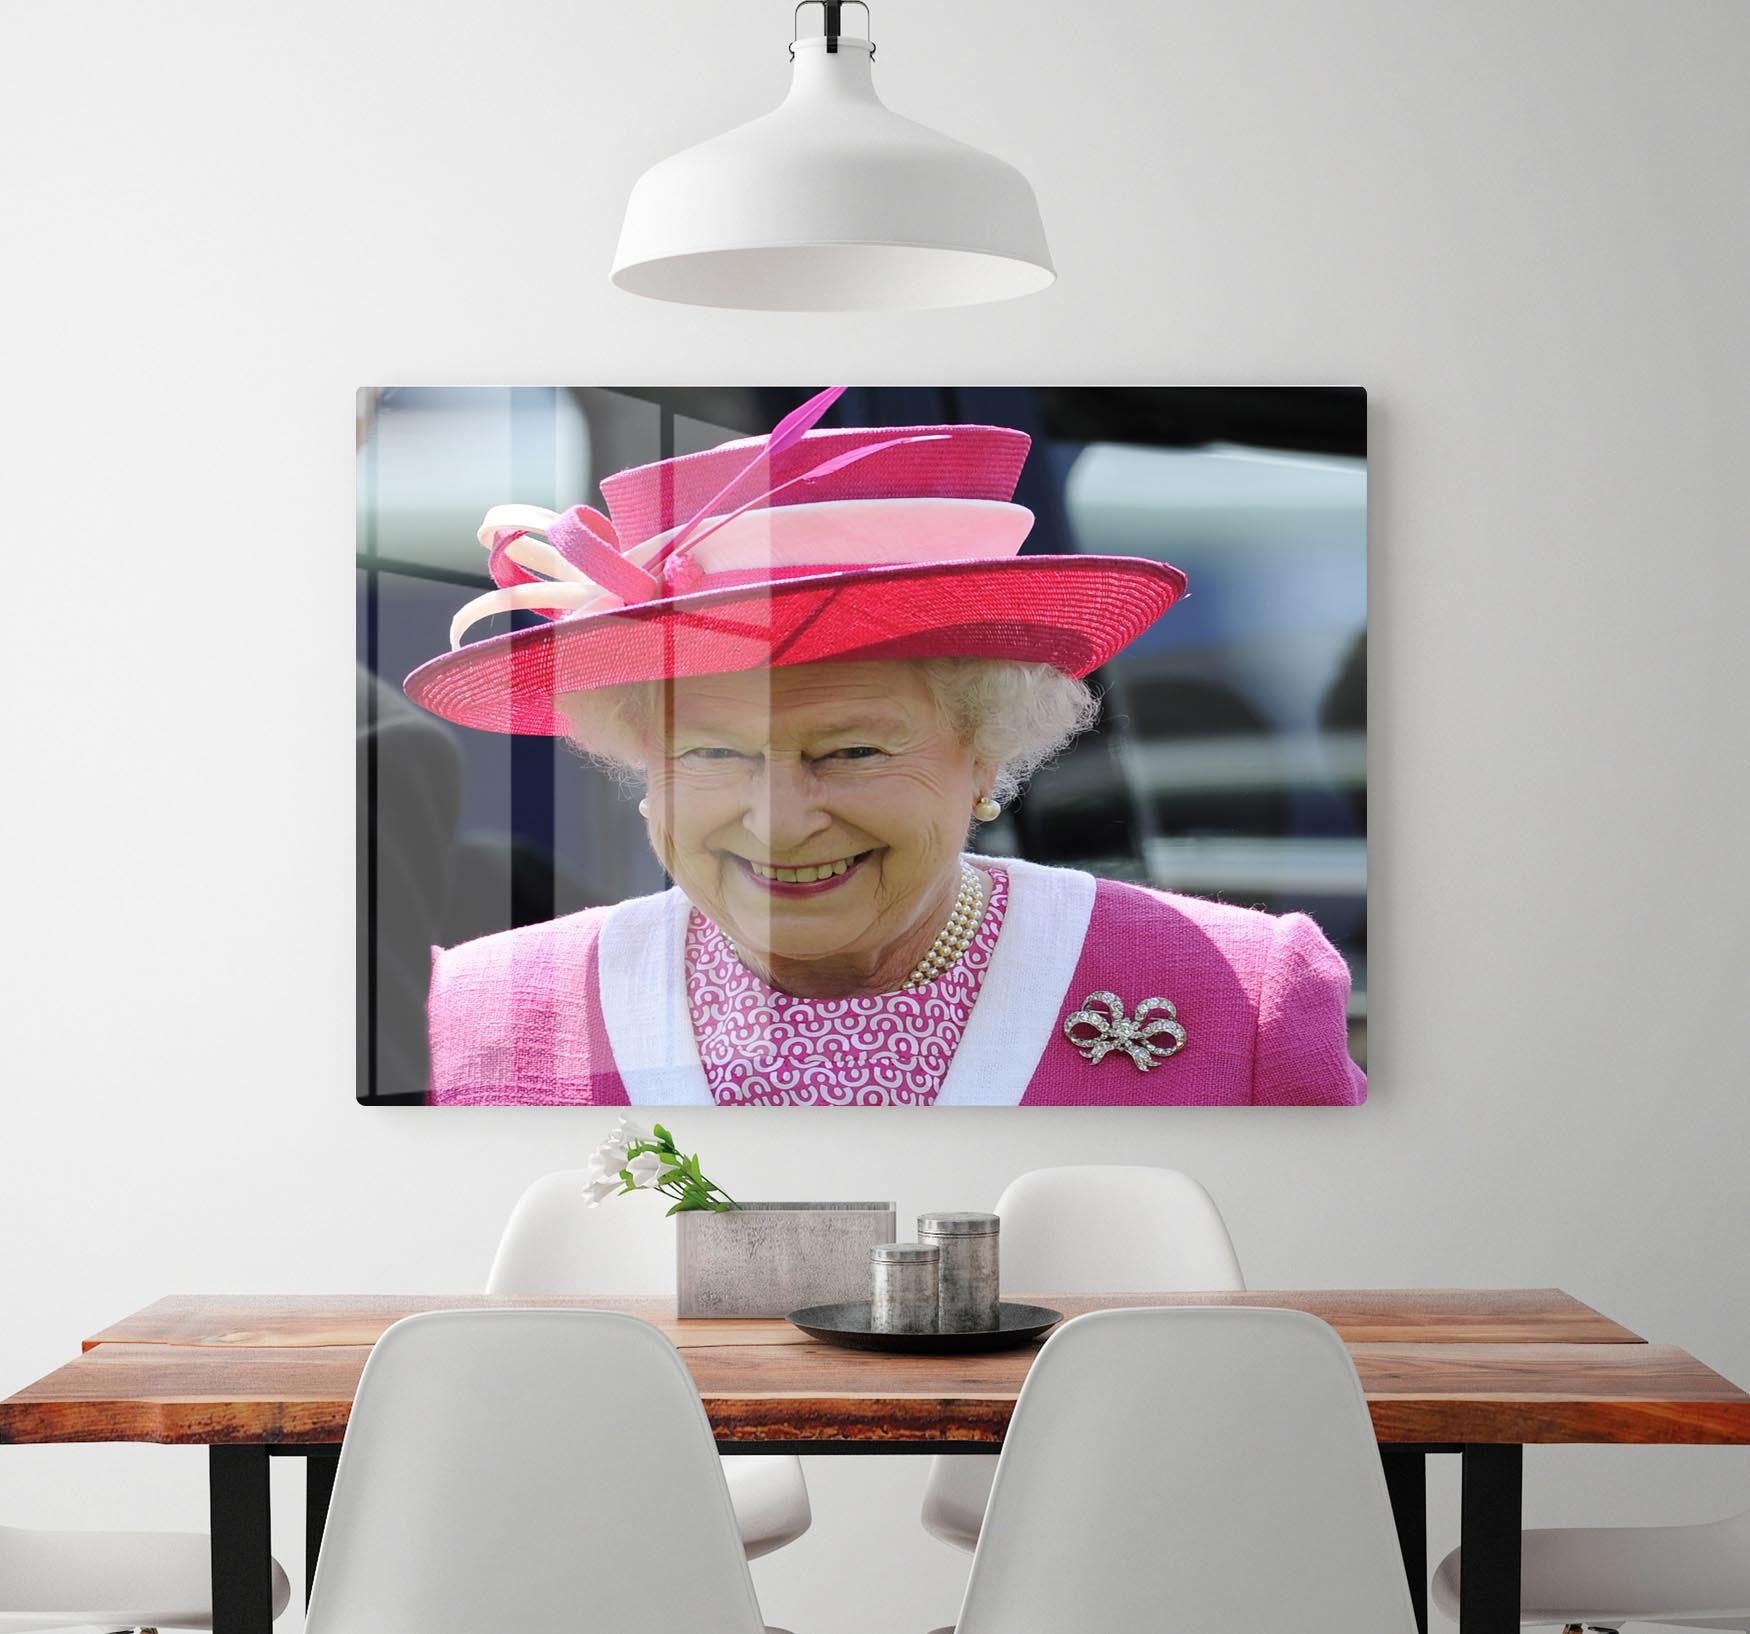 Queen Elizabeth II smiling at the Derby HD Metal Print